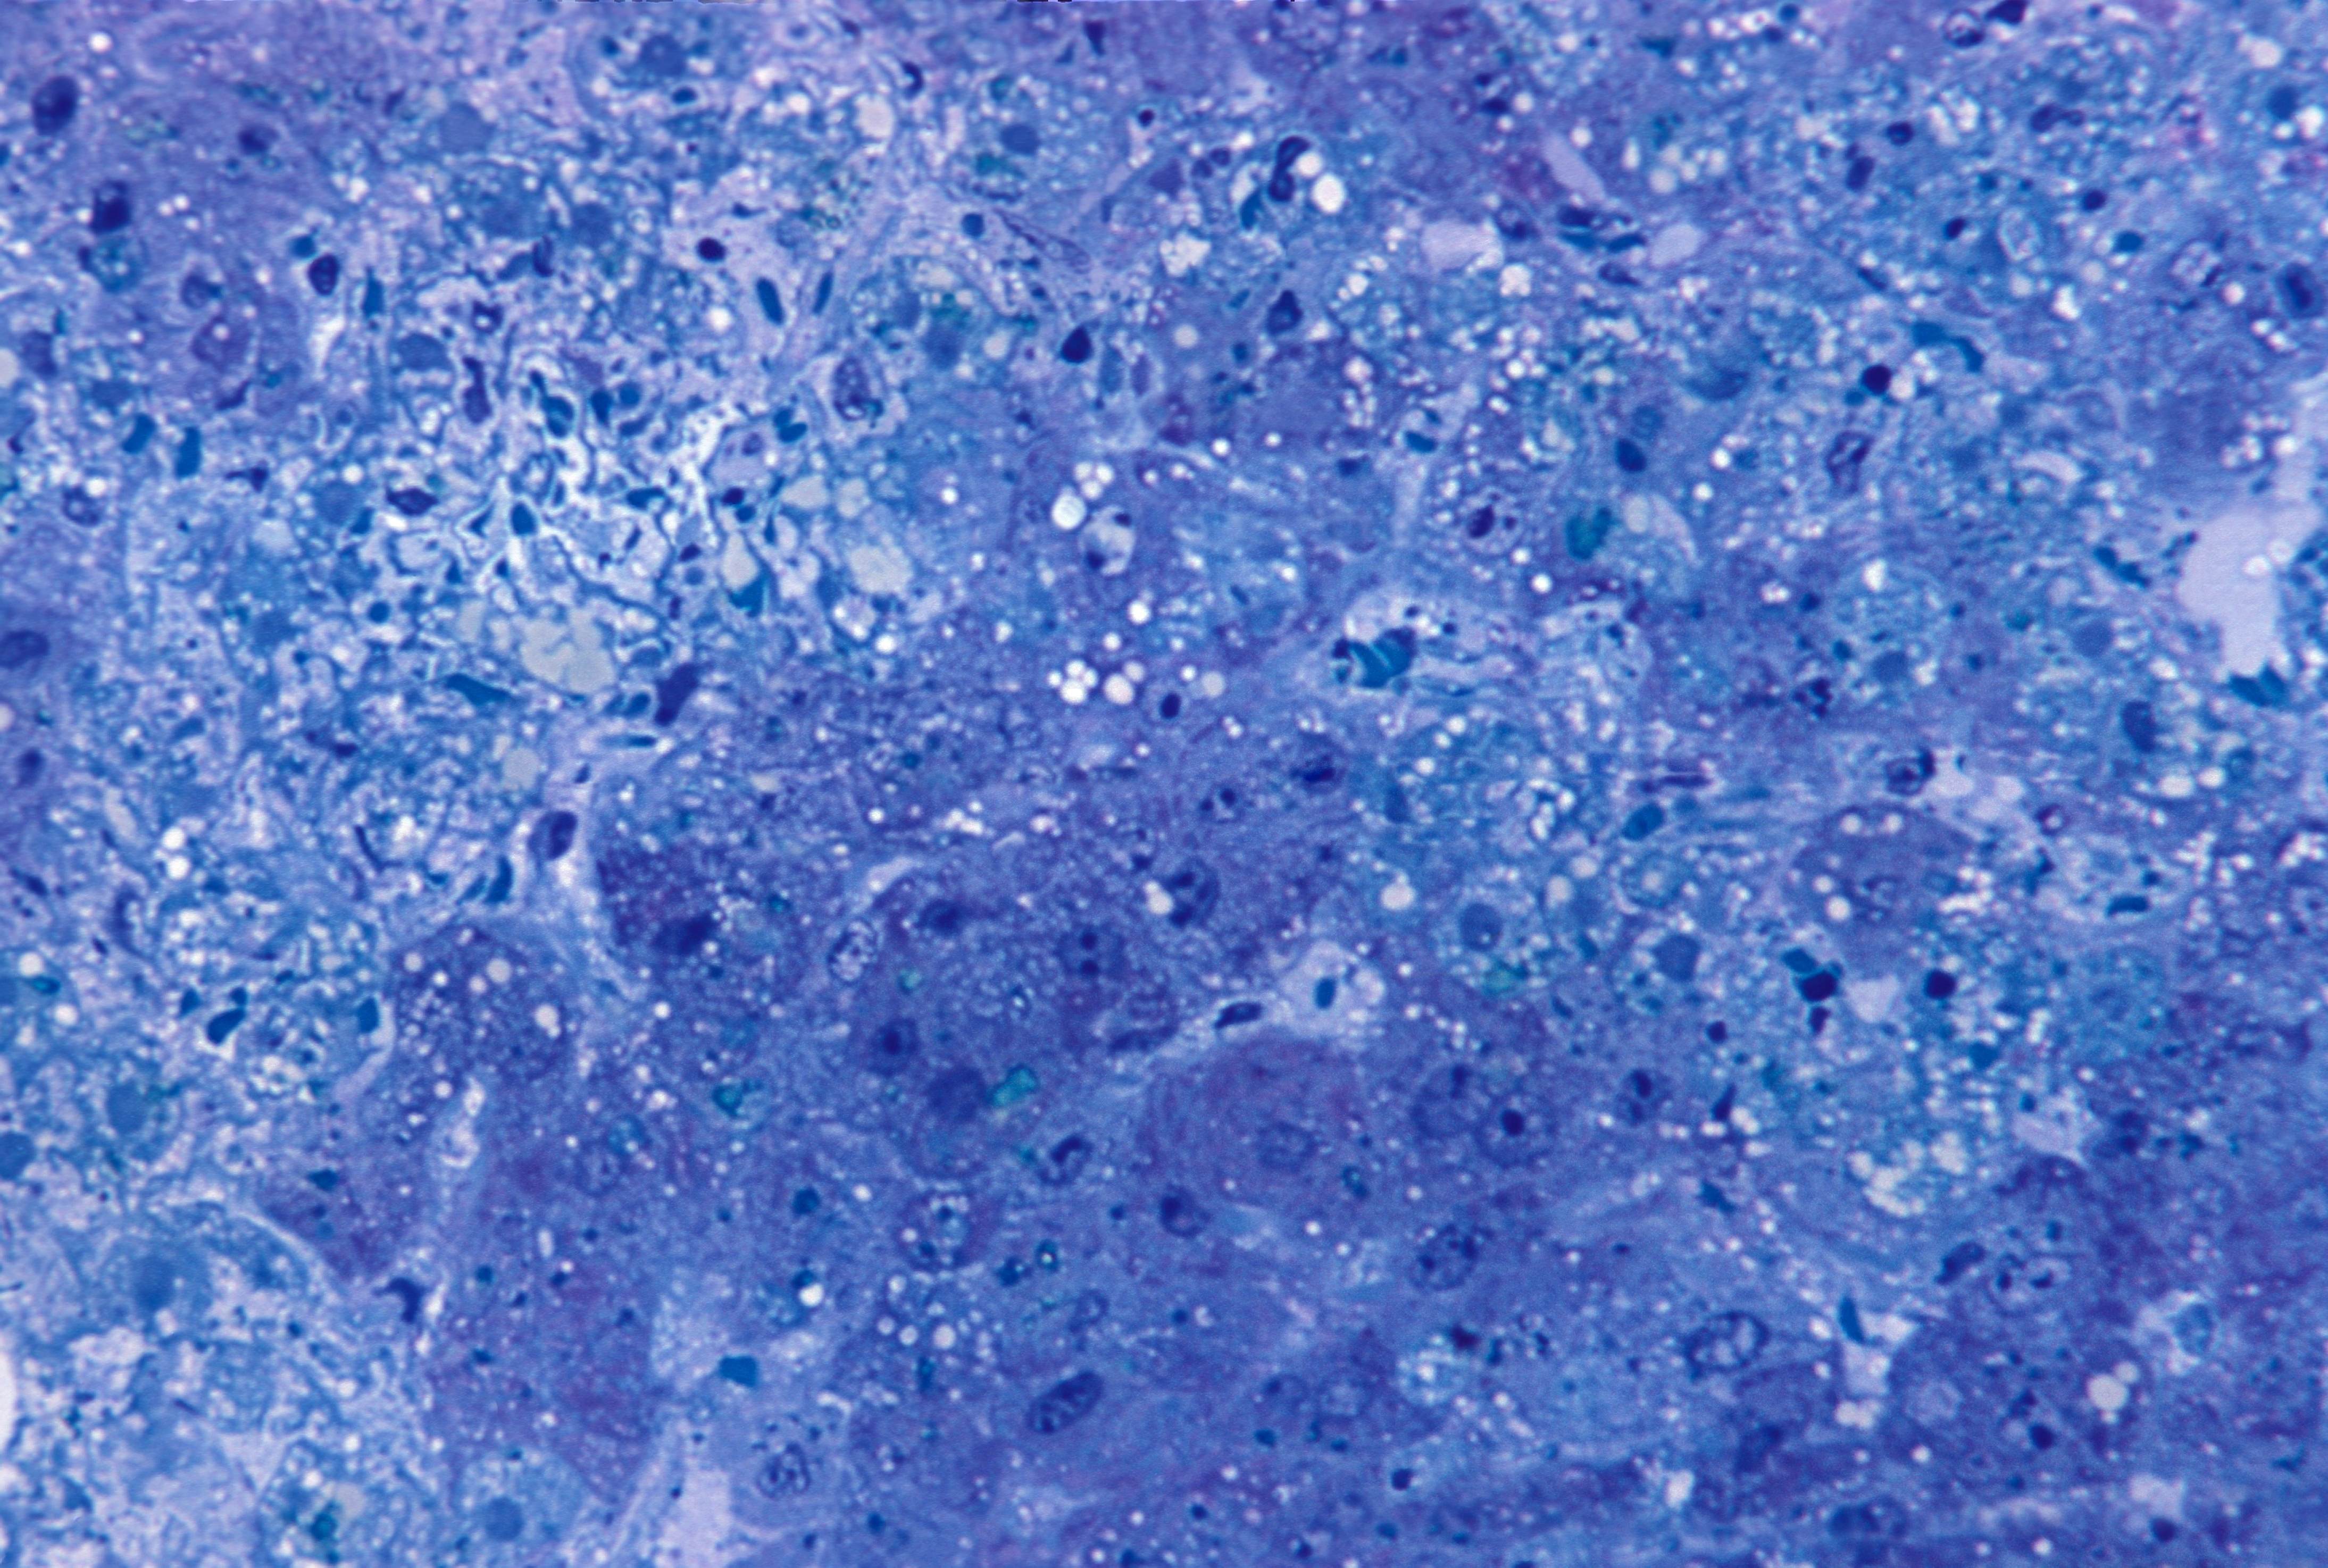 Free picture: micrograph, hepatitis, lassa, virus